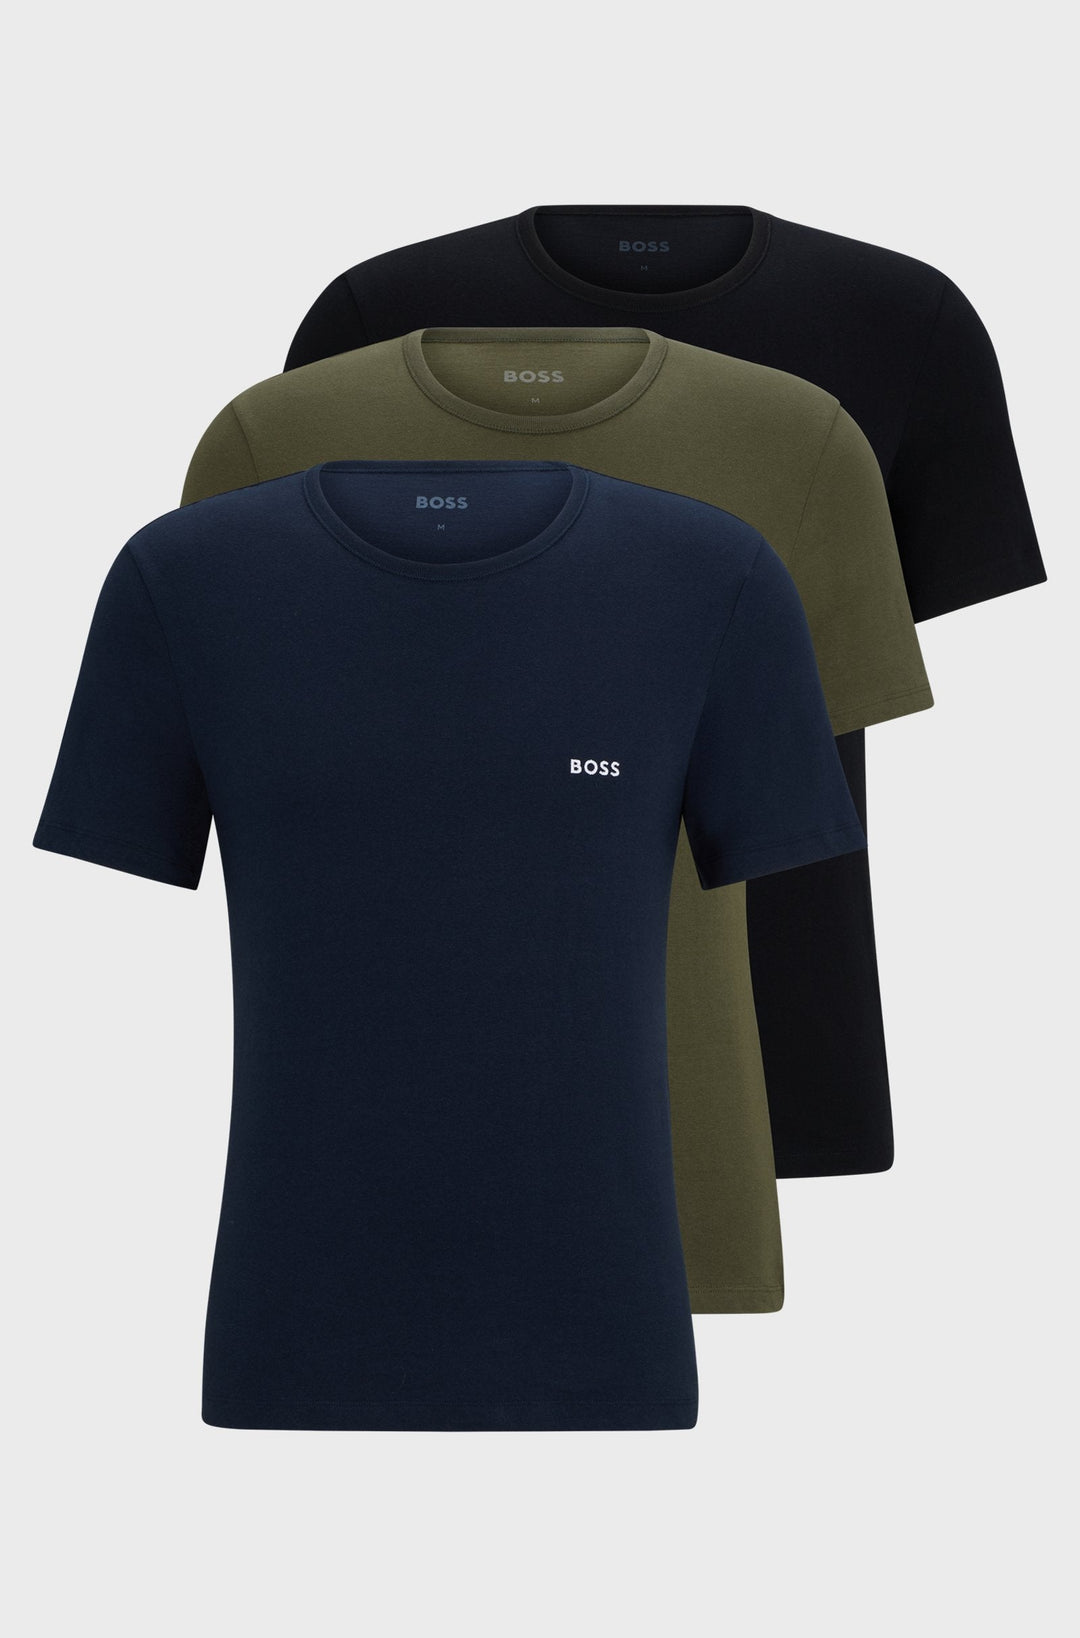 Hugo Boss Mens S/S R-Neck T-Shirts 50509255